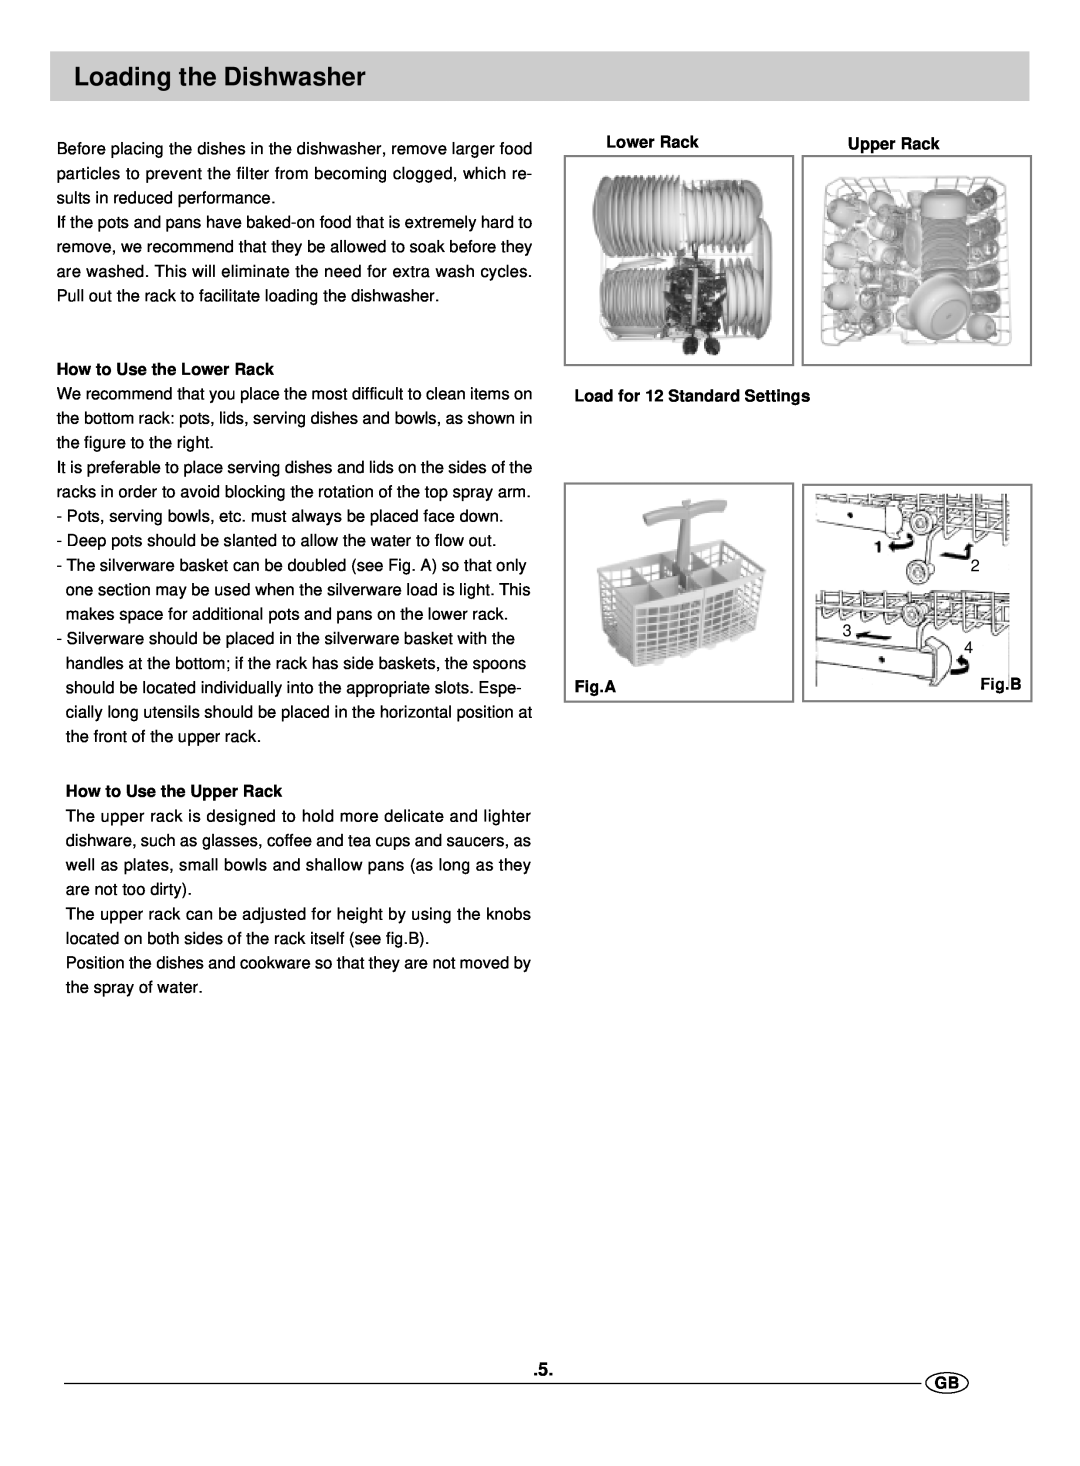 Haier WQP12-EFM manual Loading the Dishwasher, How to Use the Lower Rack, How to Use the Upper Rack, Fig.A, Fig.B 